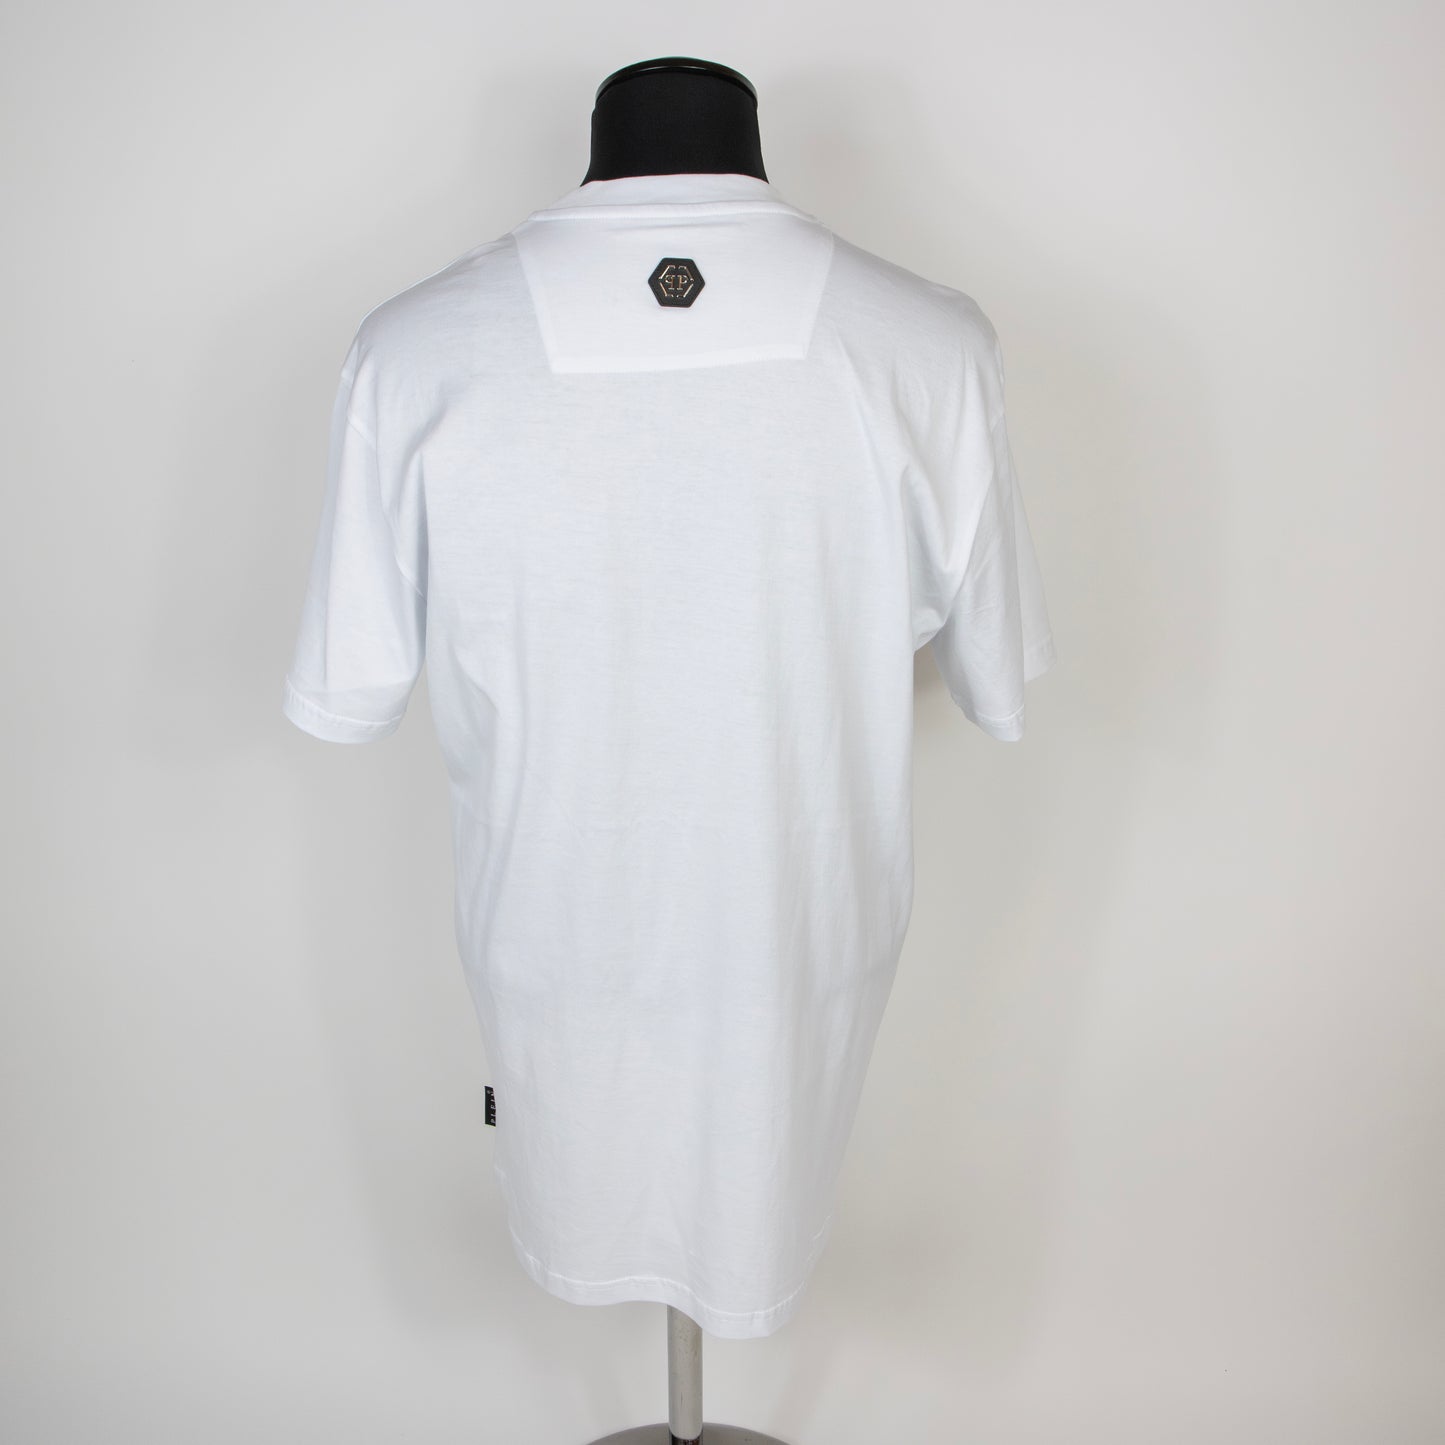 Philipp Plein Skull & Crossbones Print T Shirt White Large